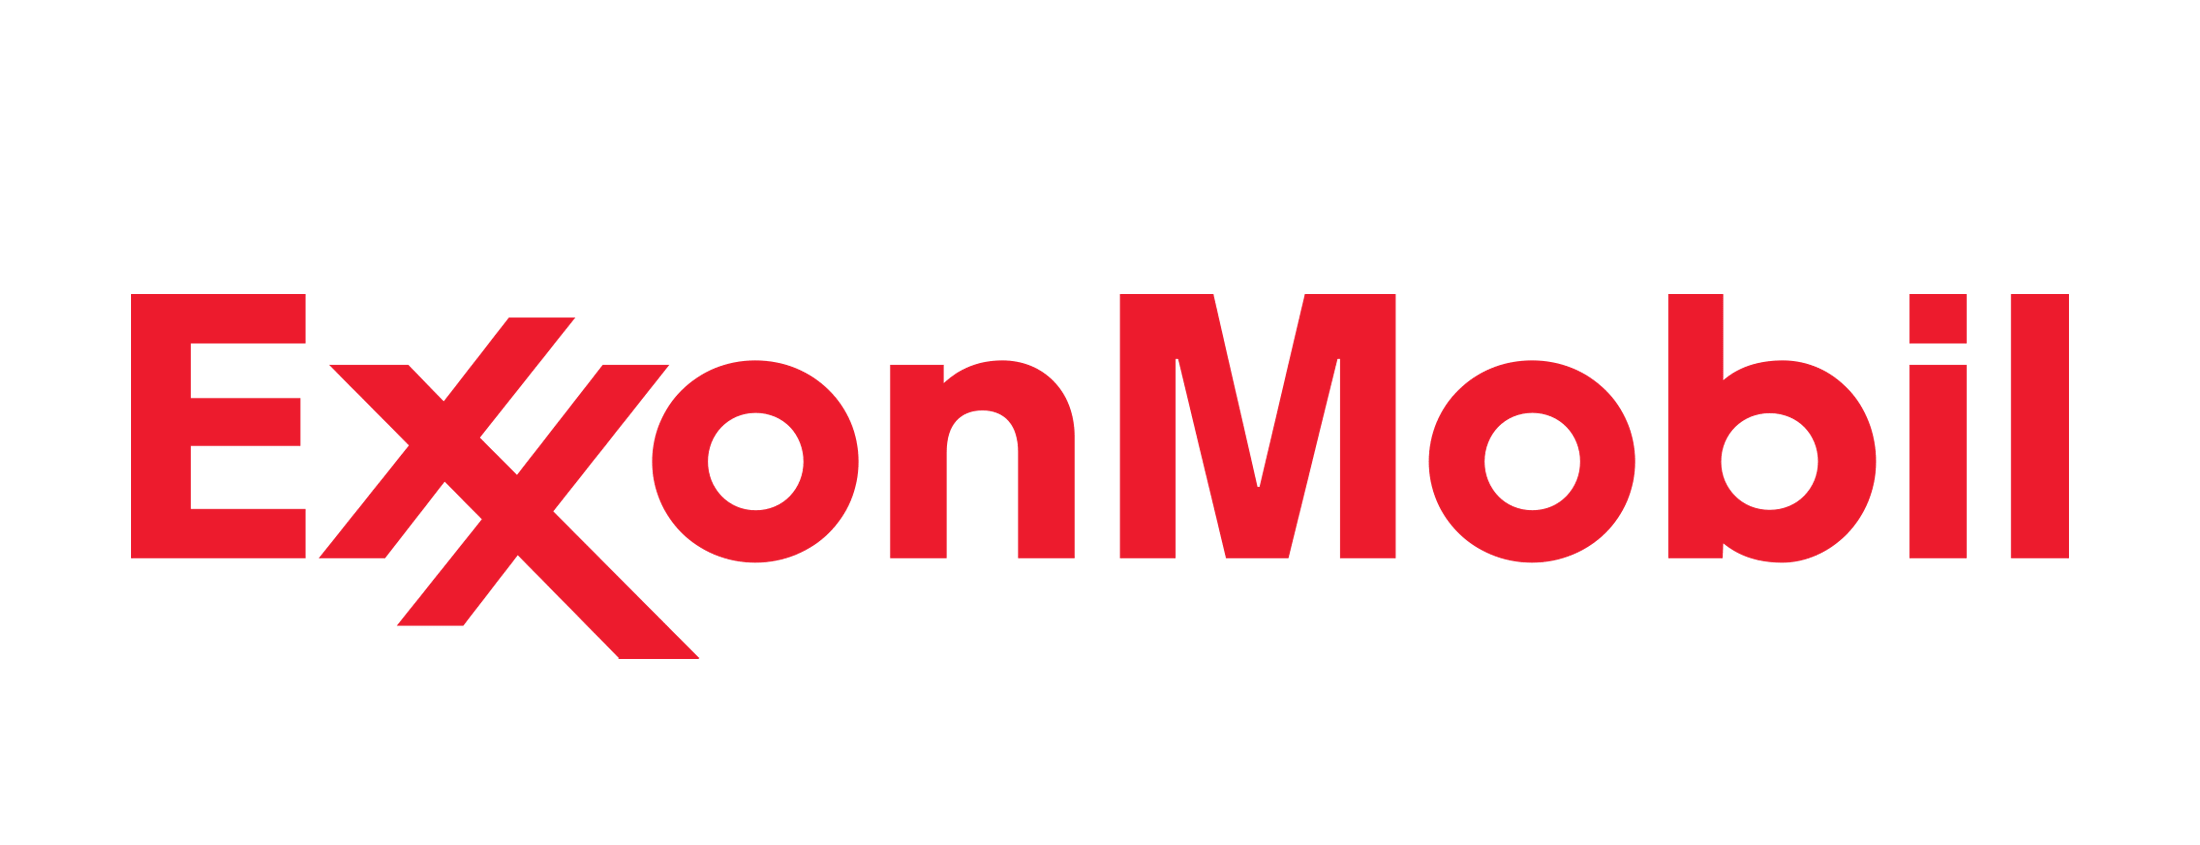 ExxonMobil-Logo-1-min-2